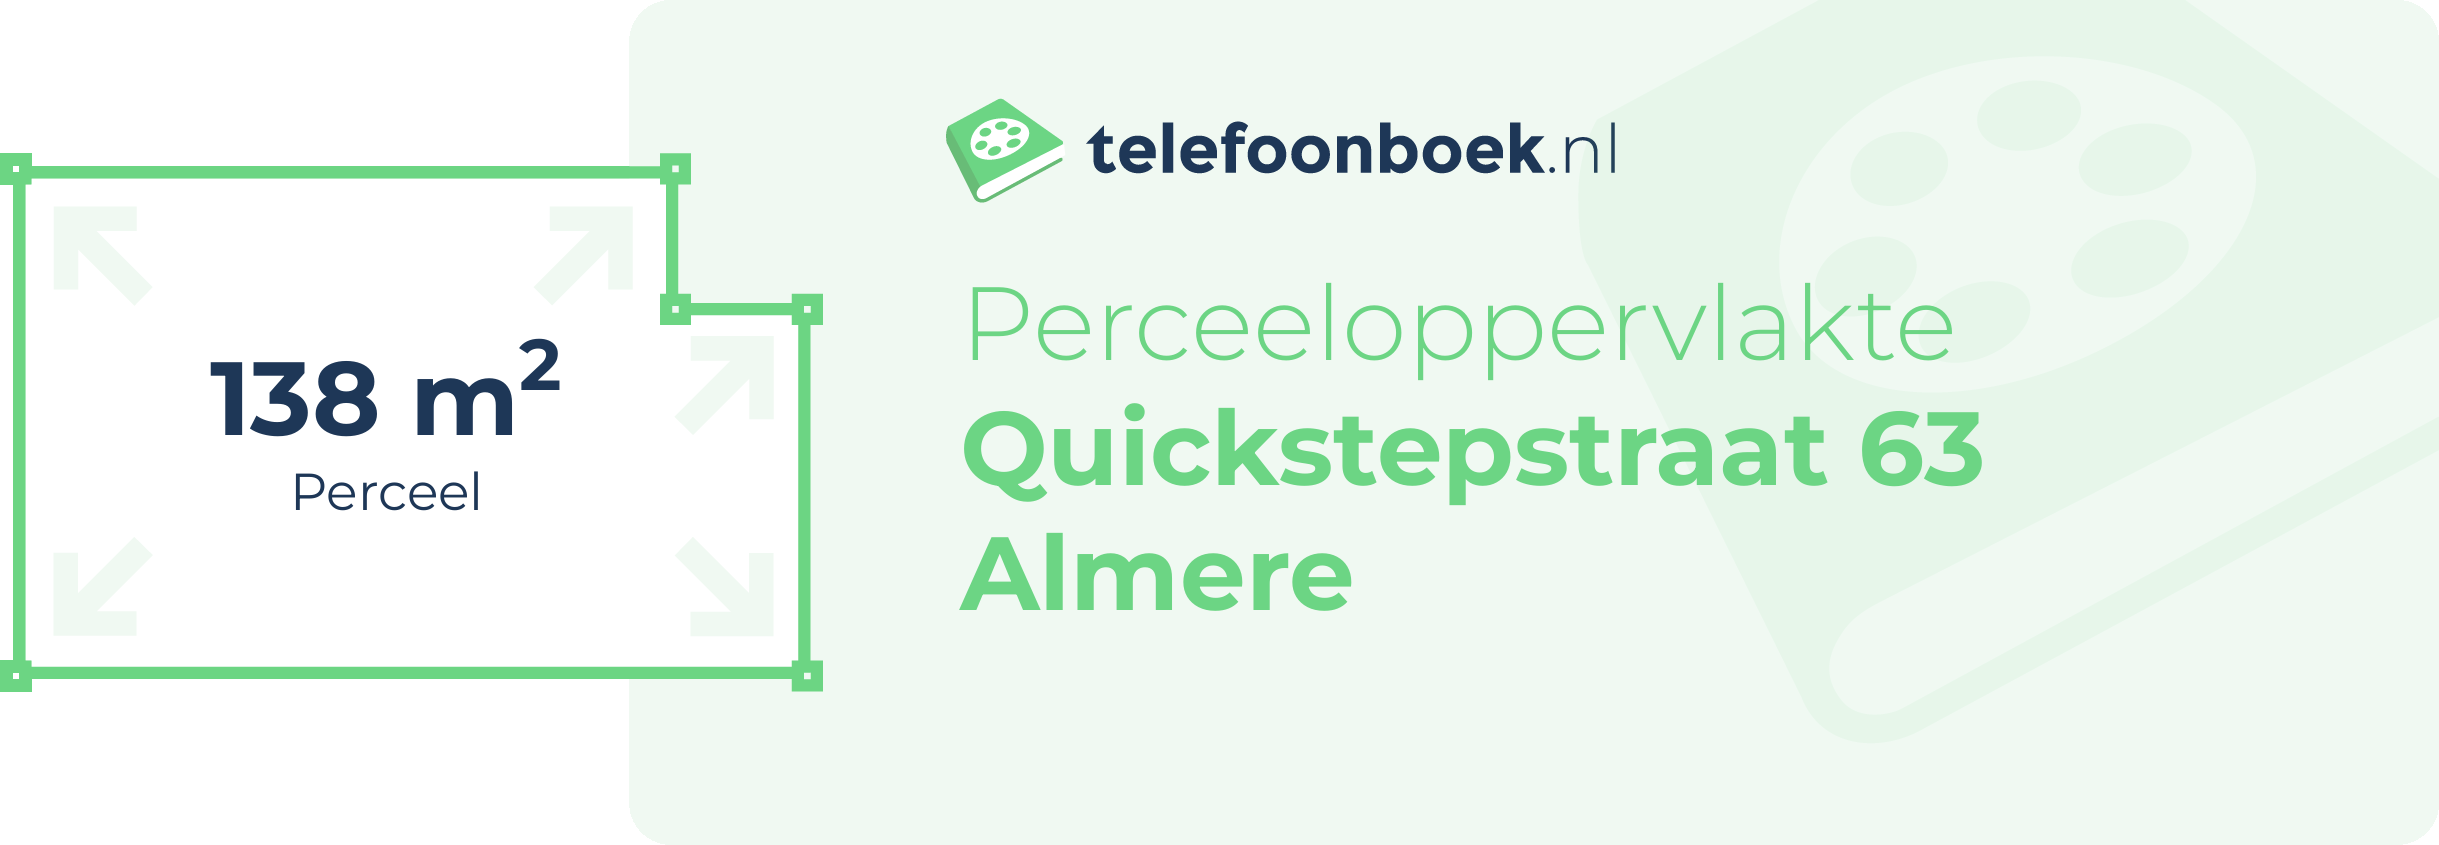 Perceeloppervlakte Quickstepstraat 63 Almere